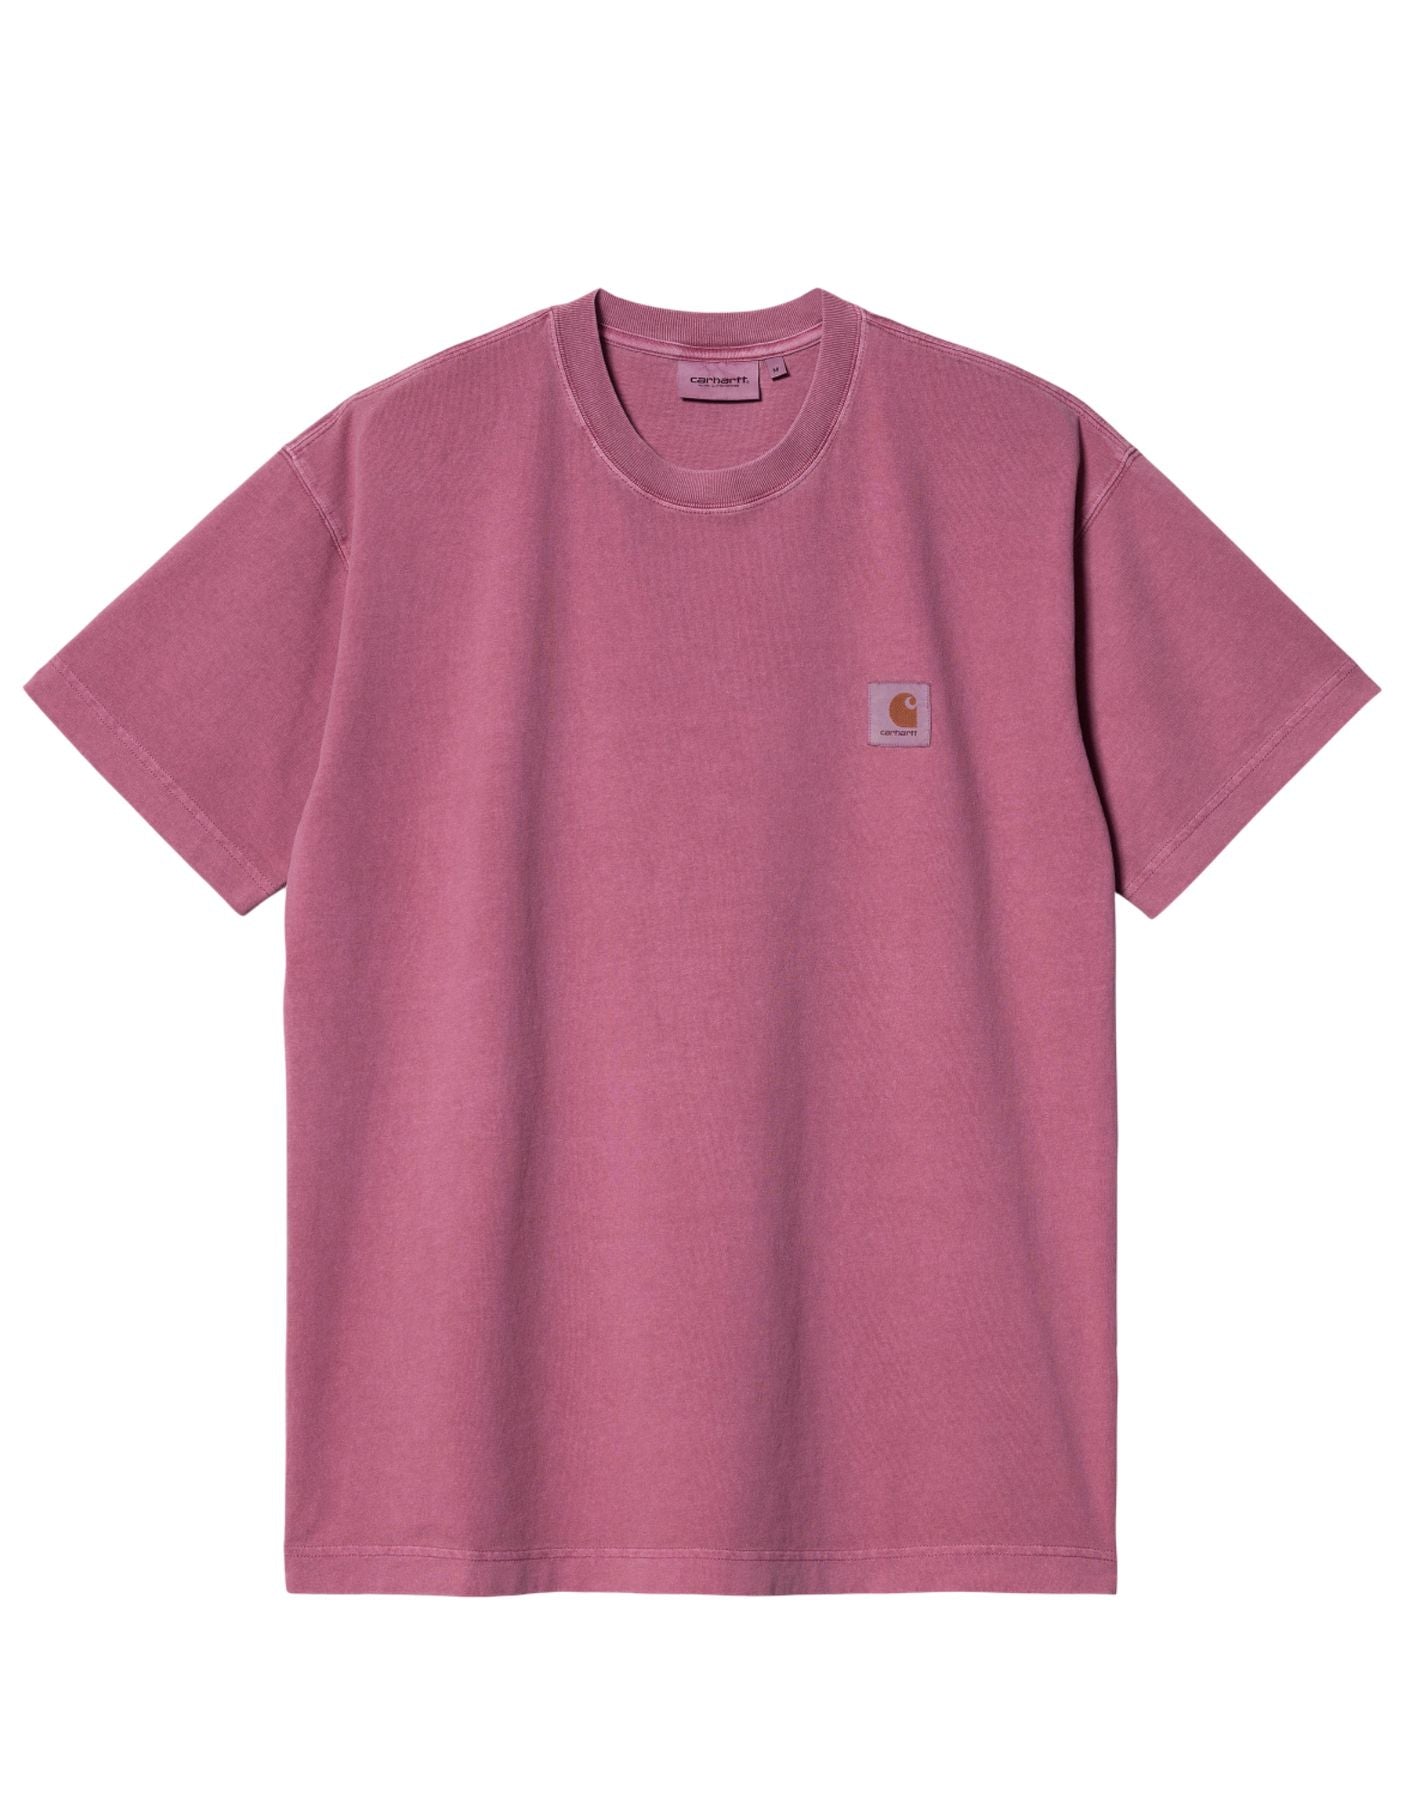 T-shirt pour l'homme i029949 1yt.gd rose CARHARTT WIP